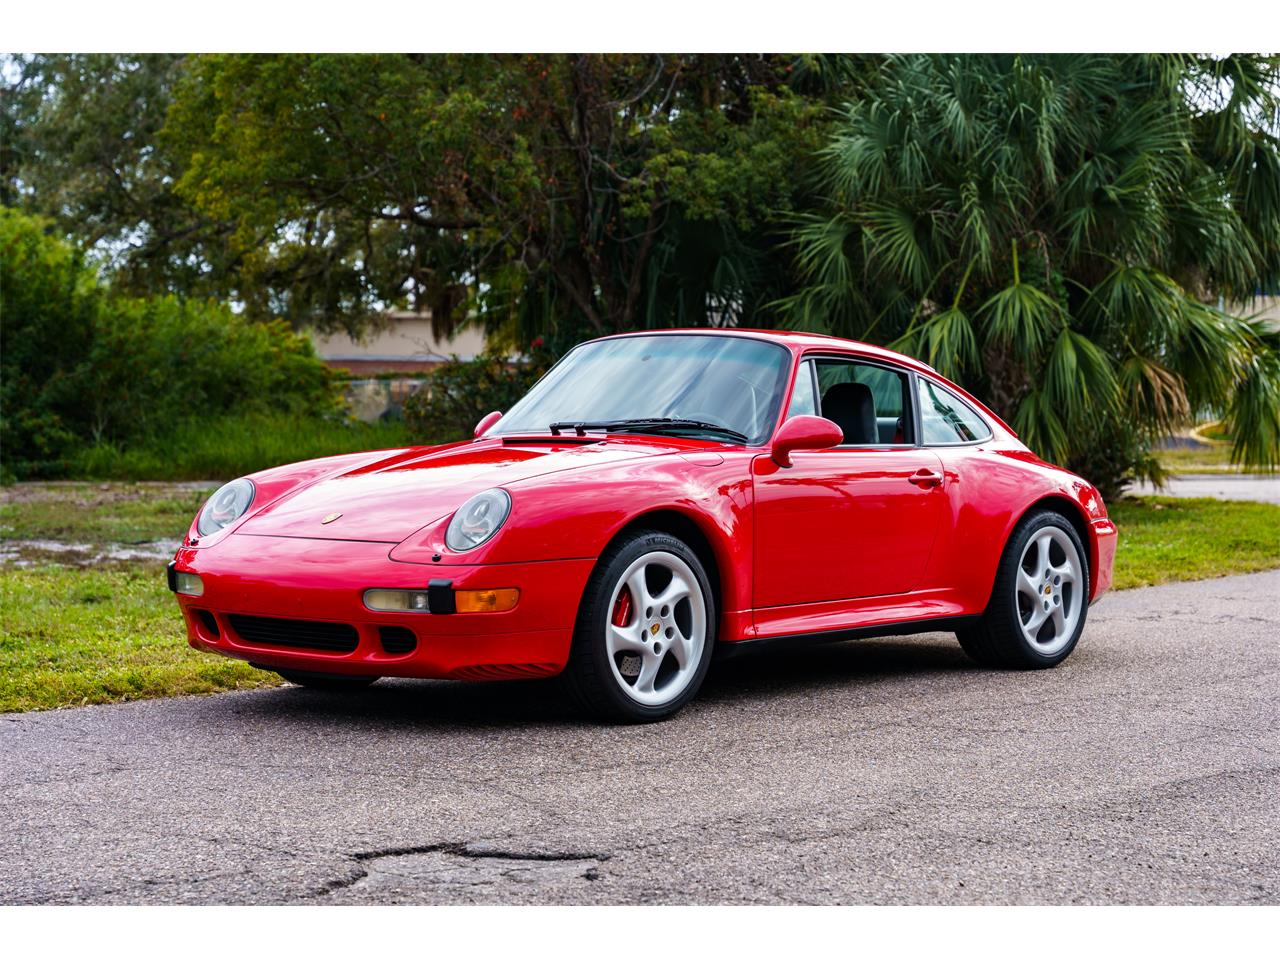 For Sale: 1997 Porsche 911 Carrera 4S in Sarasota , Florida for sale in Sarasota, FL